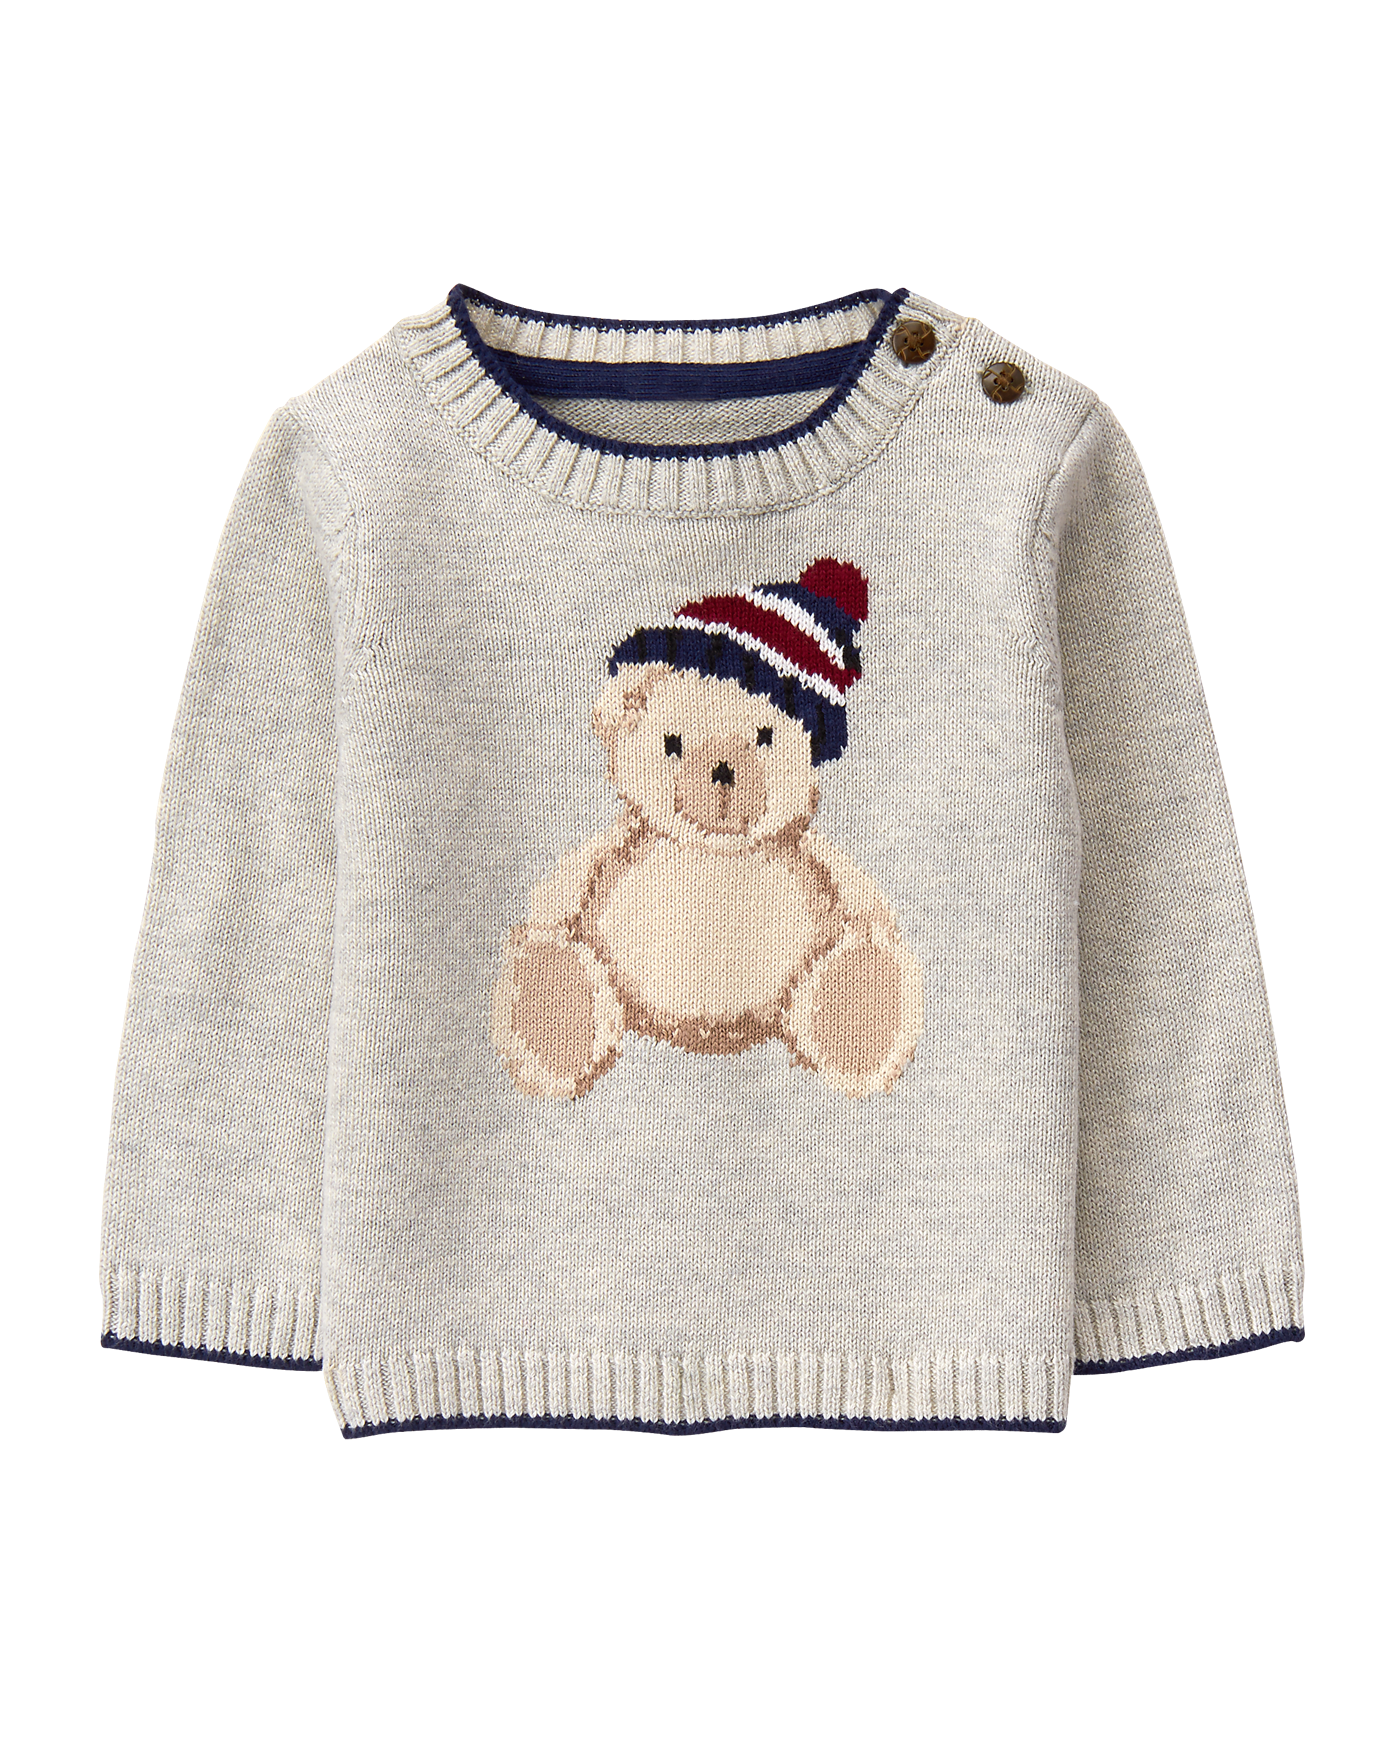 teddy bear sweater